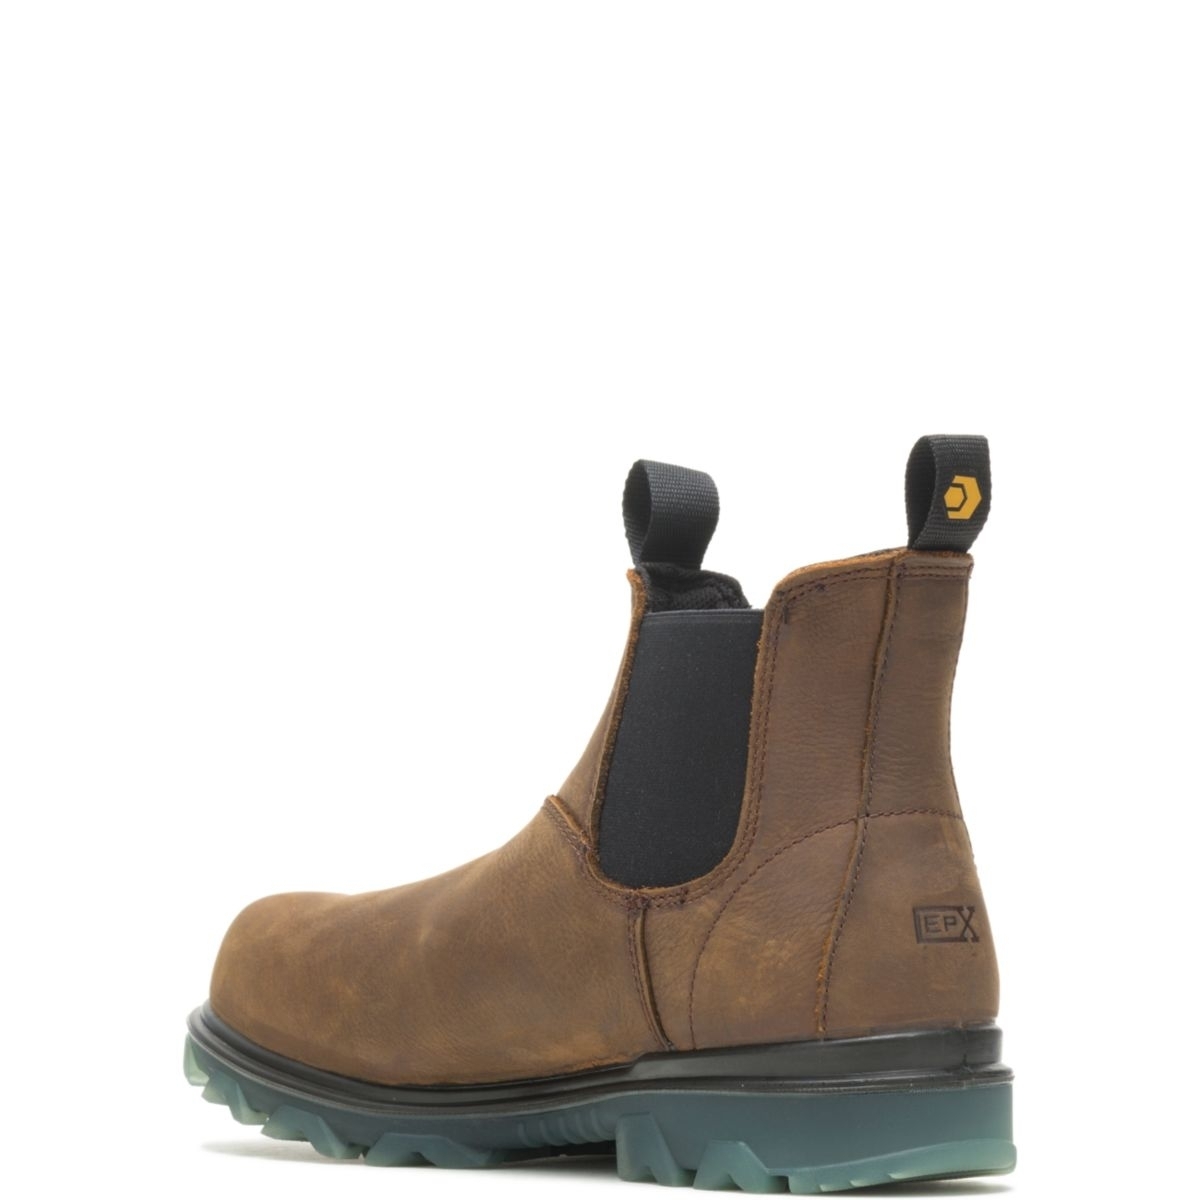 WOLVERINE Men's I-90 EPXÂ® Waterproof Soft Toe Romeo Pull On Work Boot Brown - W10790 - SUDAN BROWN, 9.5